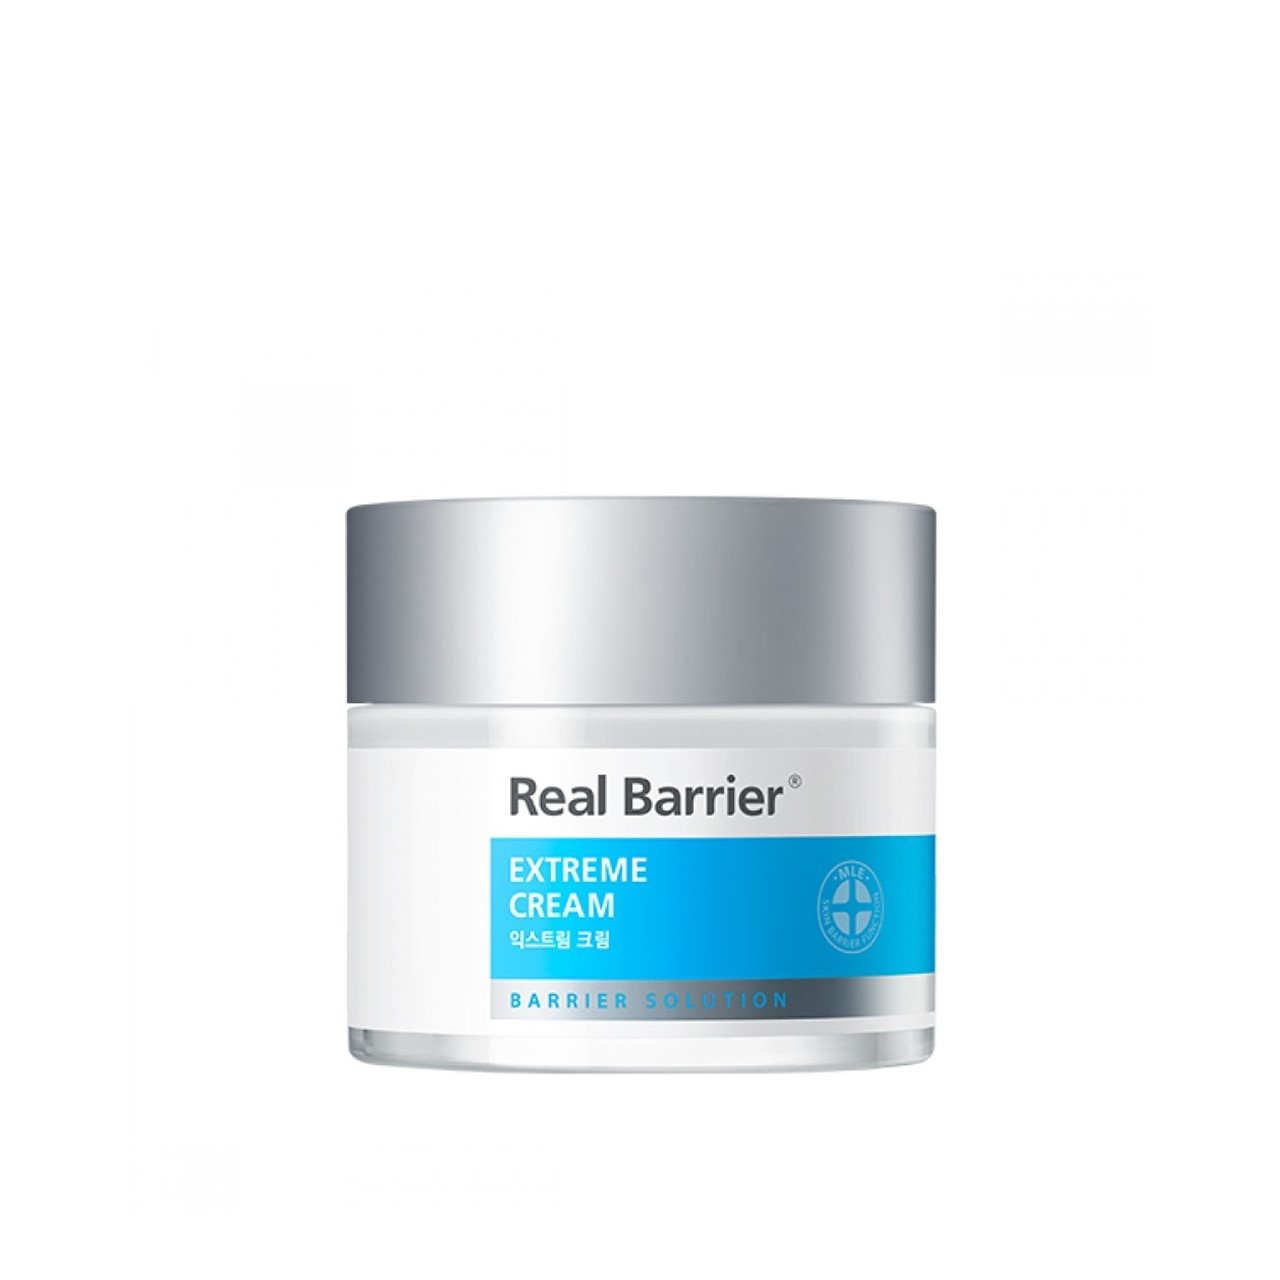 Real Barrier Extreme Cream 50ml (1.69fl oz)